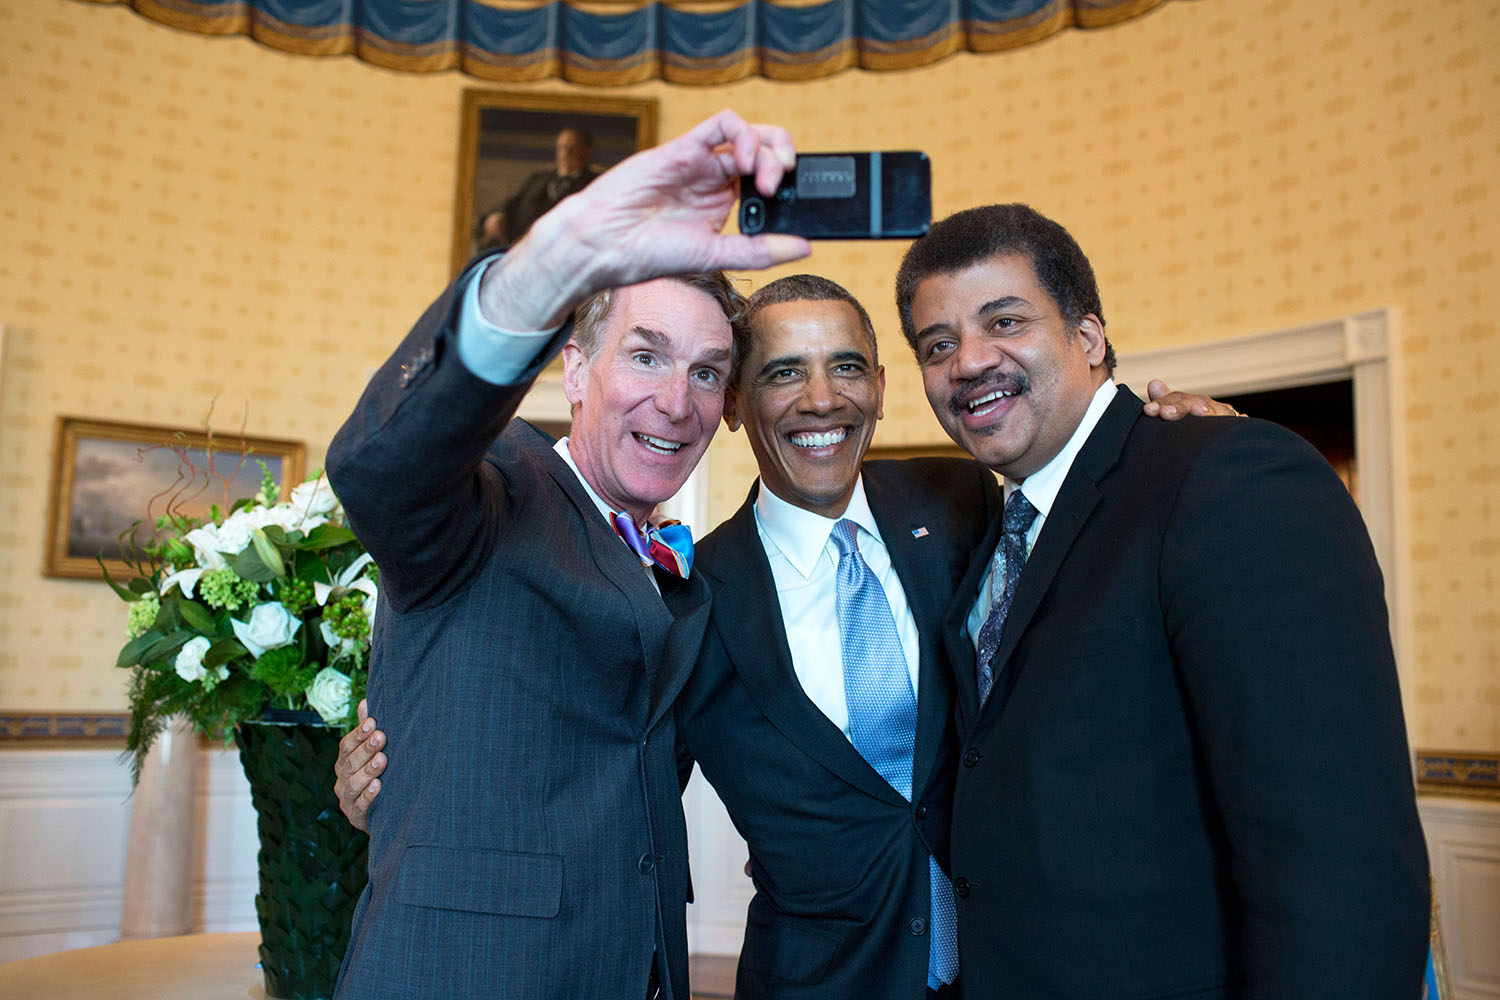 Bill_Nye_Barack_Obama_and_Neil_deGrasse_Tyson_selfie_2014.jpg  by Acef Ebrahimi